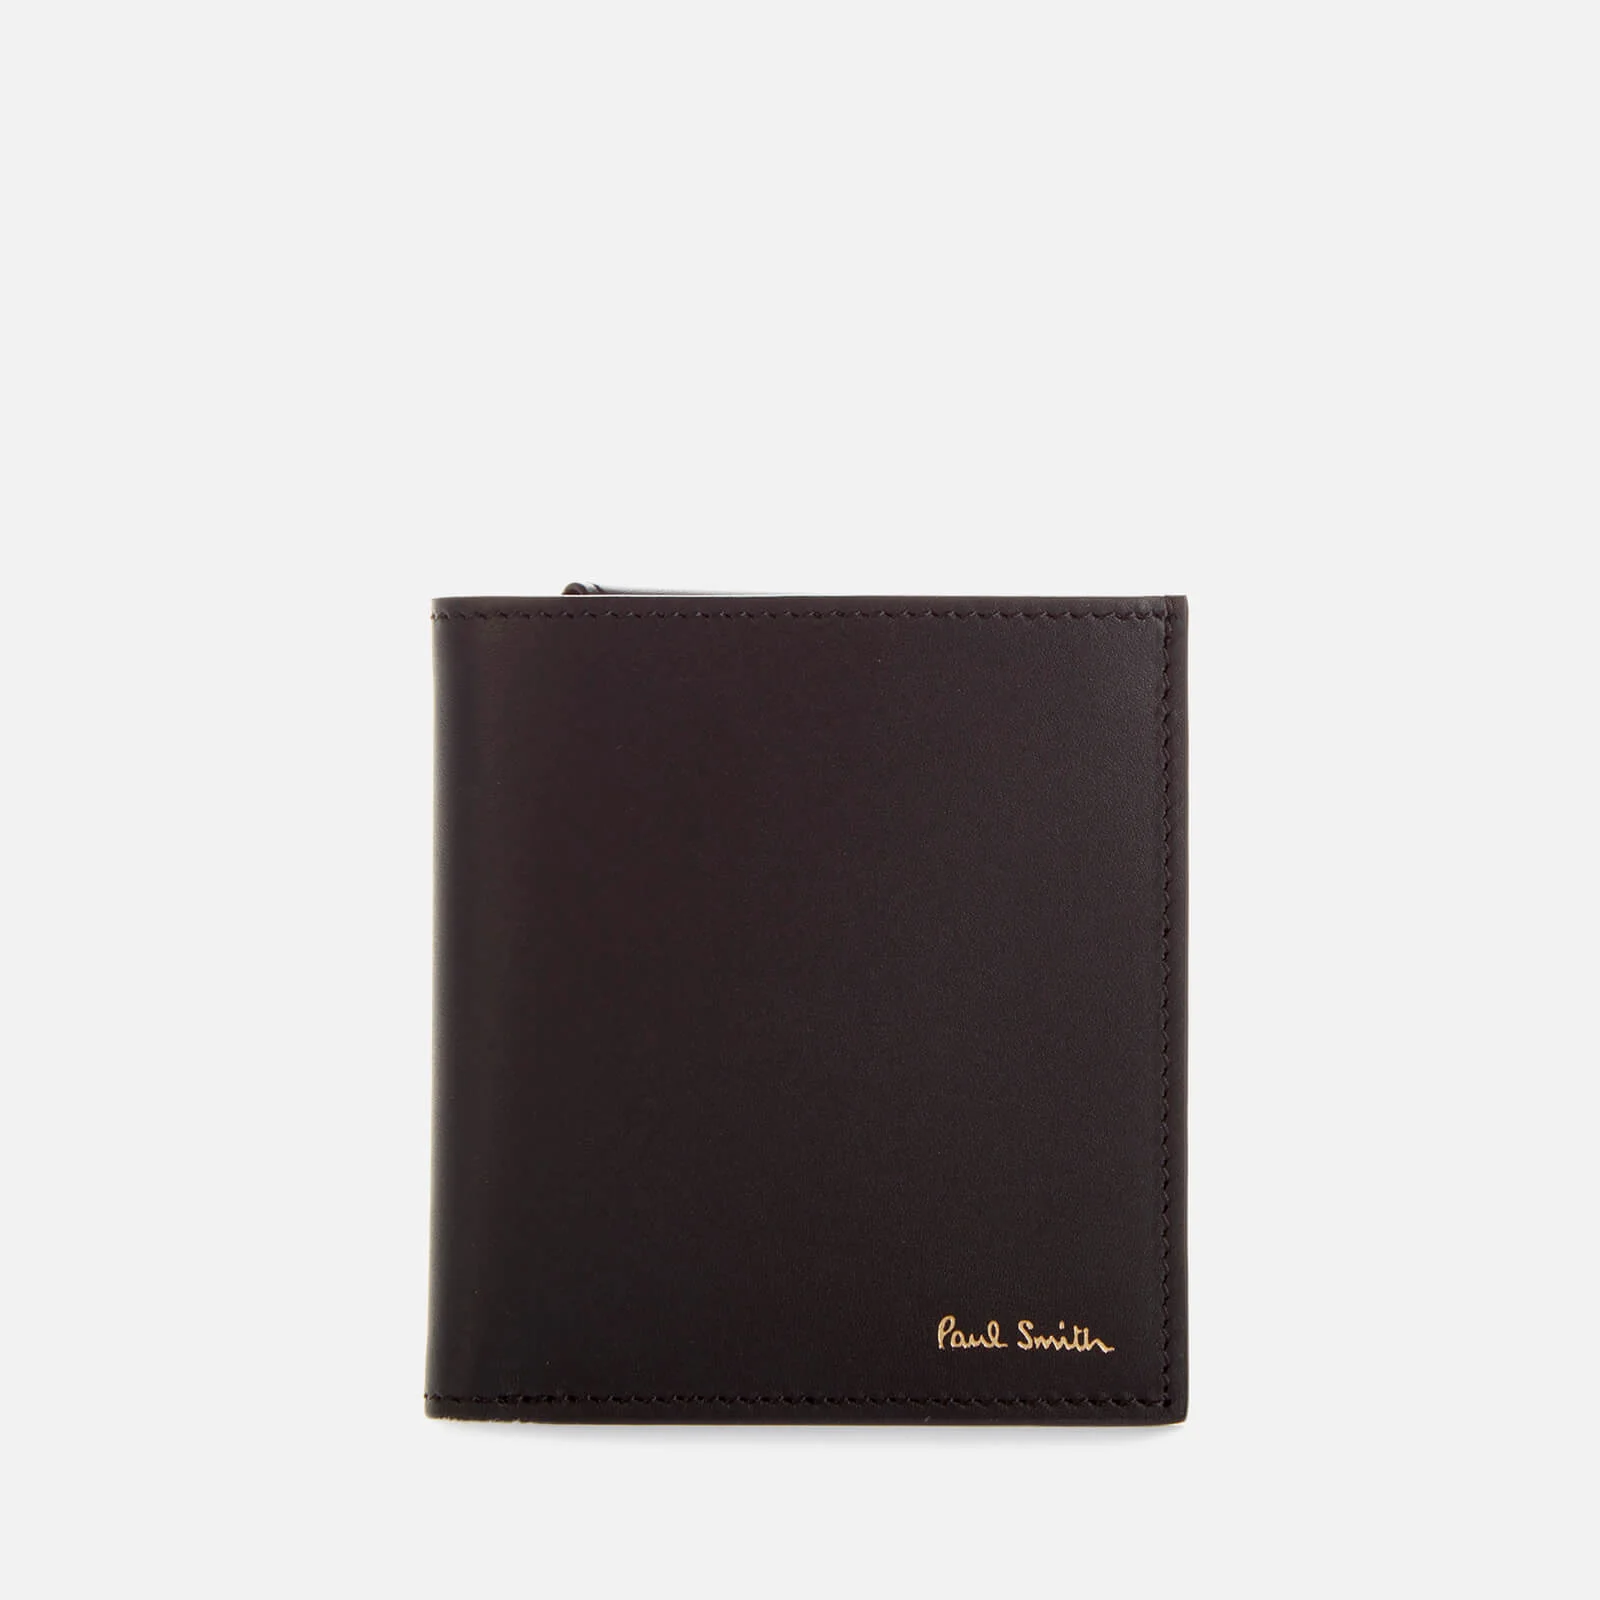 PS Paul Smith Men's Folding Wallet - Black Image 1